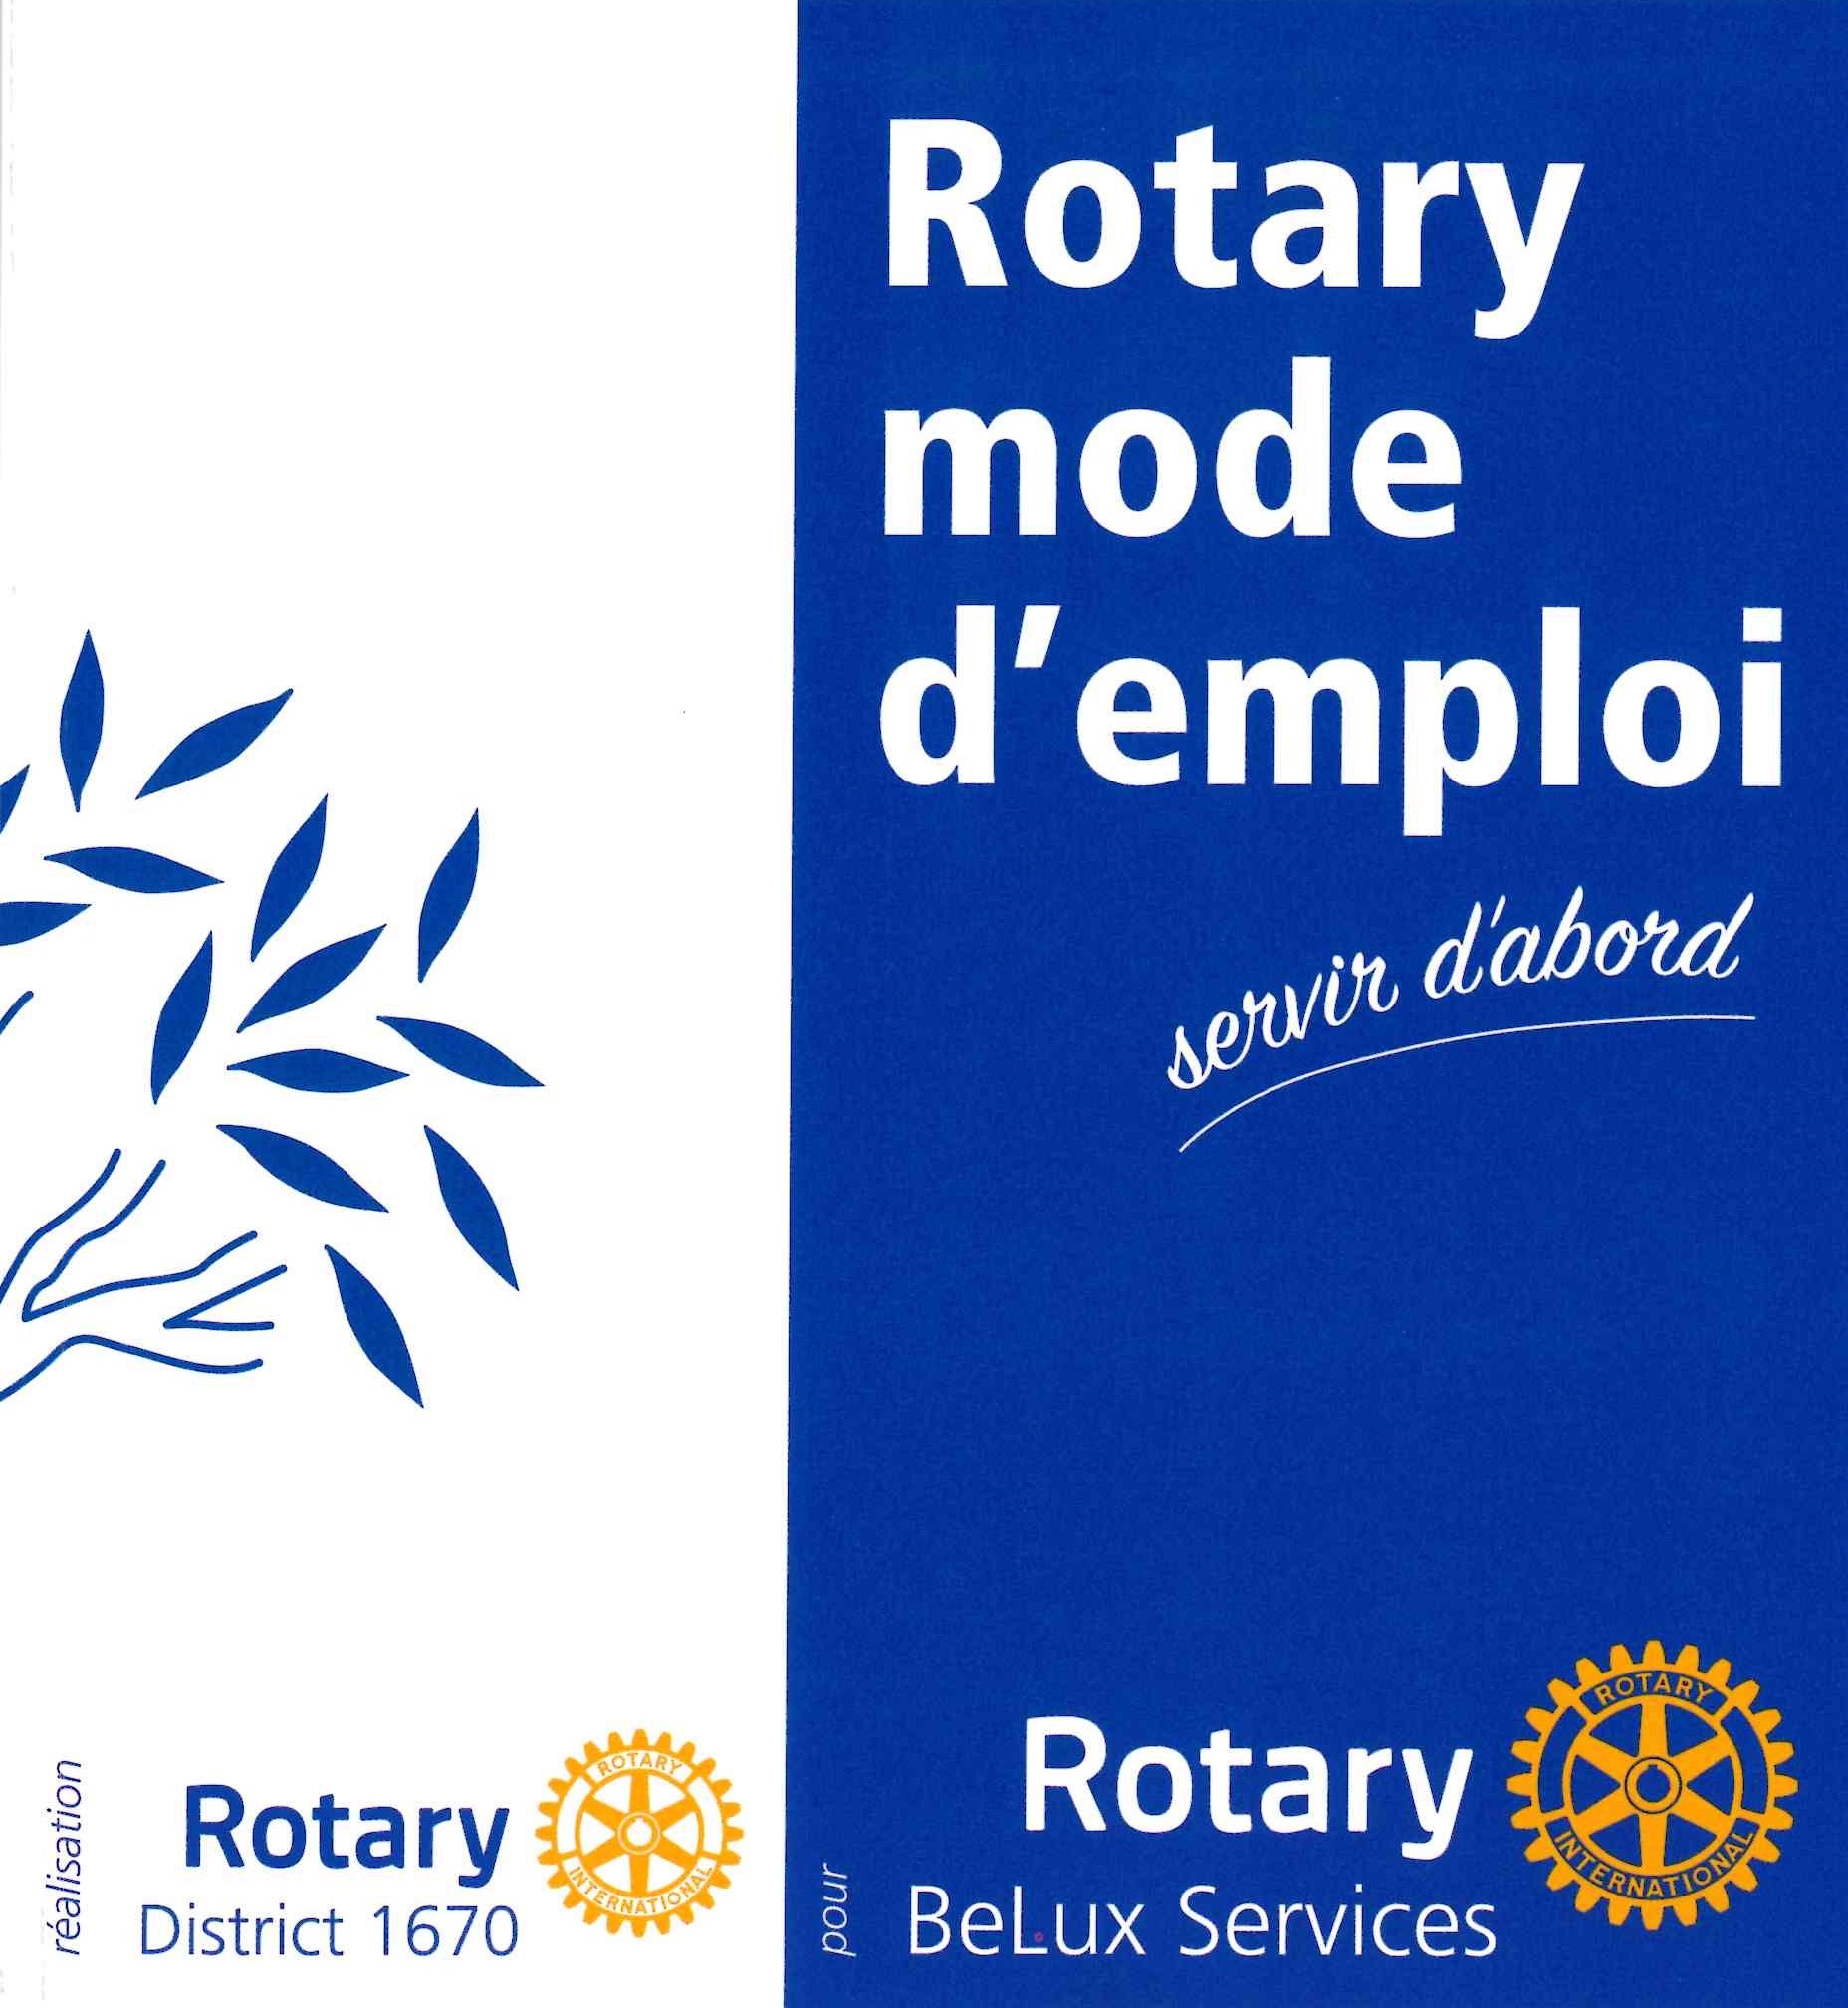 Rotary, mode d'emploi